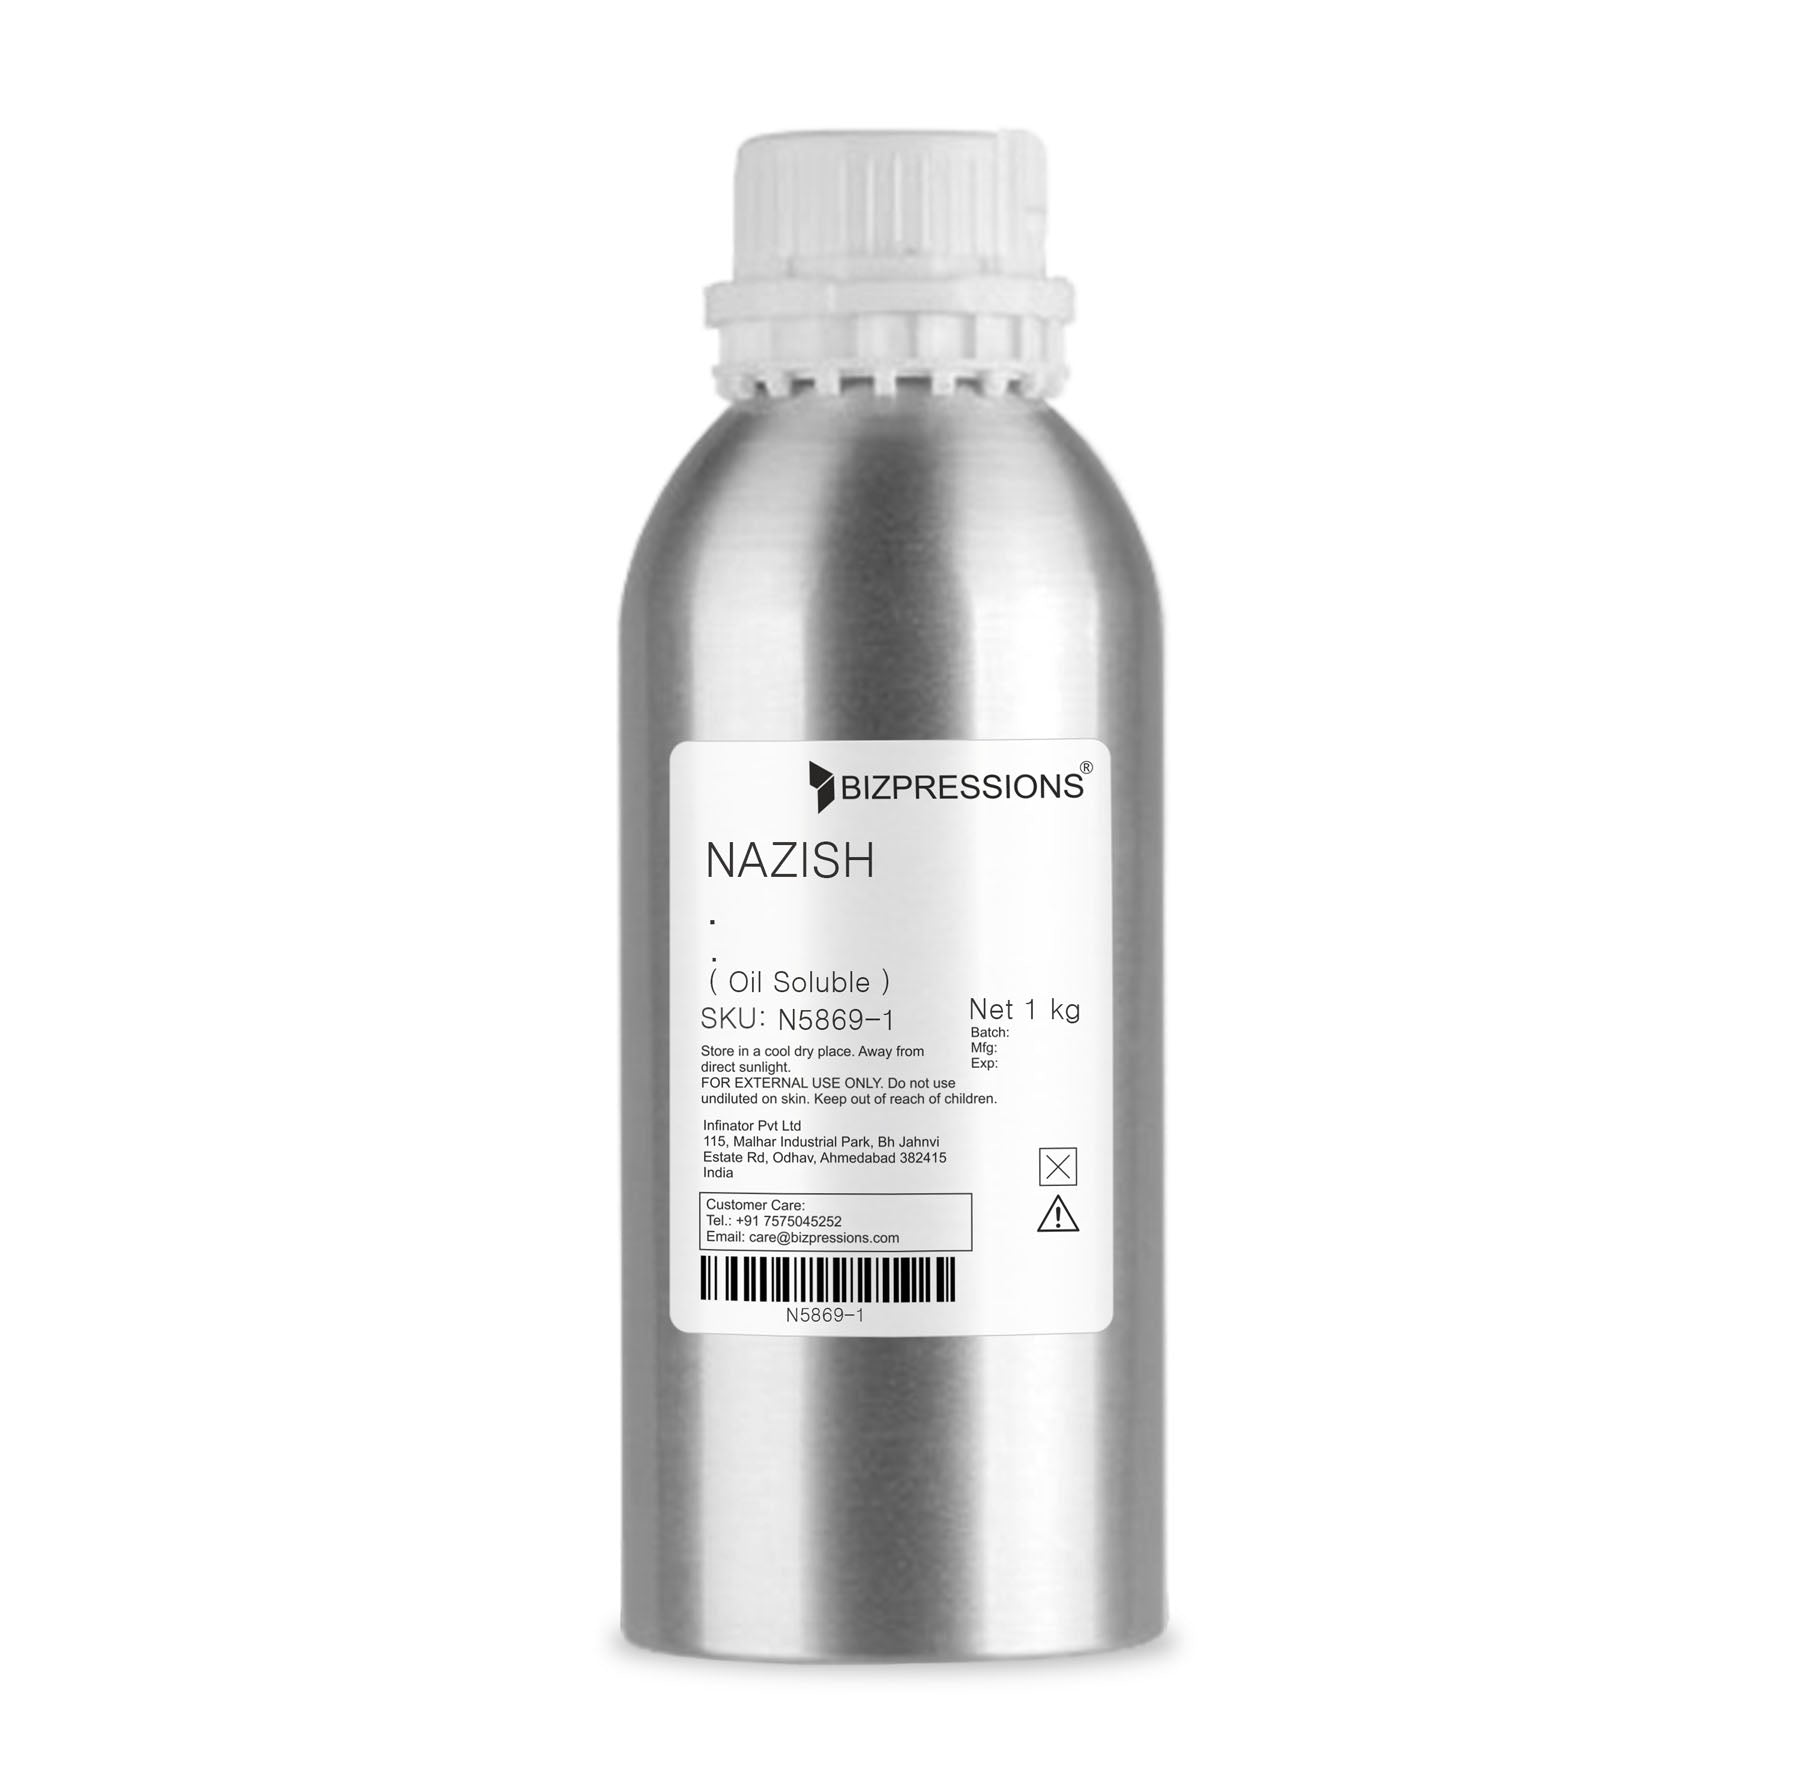 NAZISH - Fragrance ( Oil Soluble ) - 1 kg